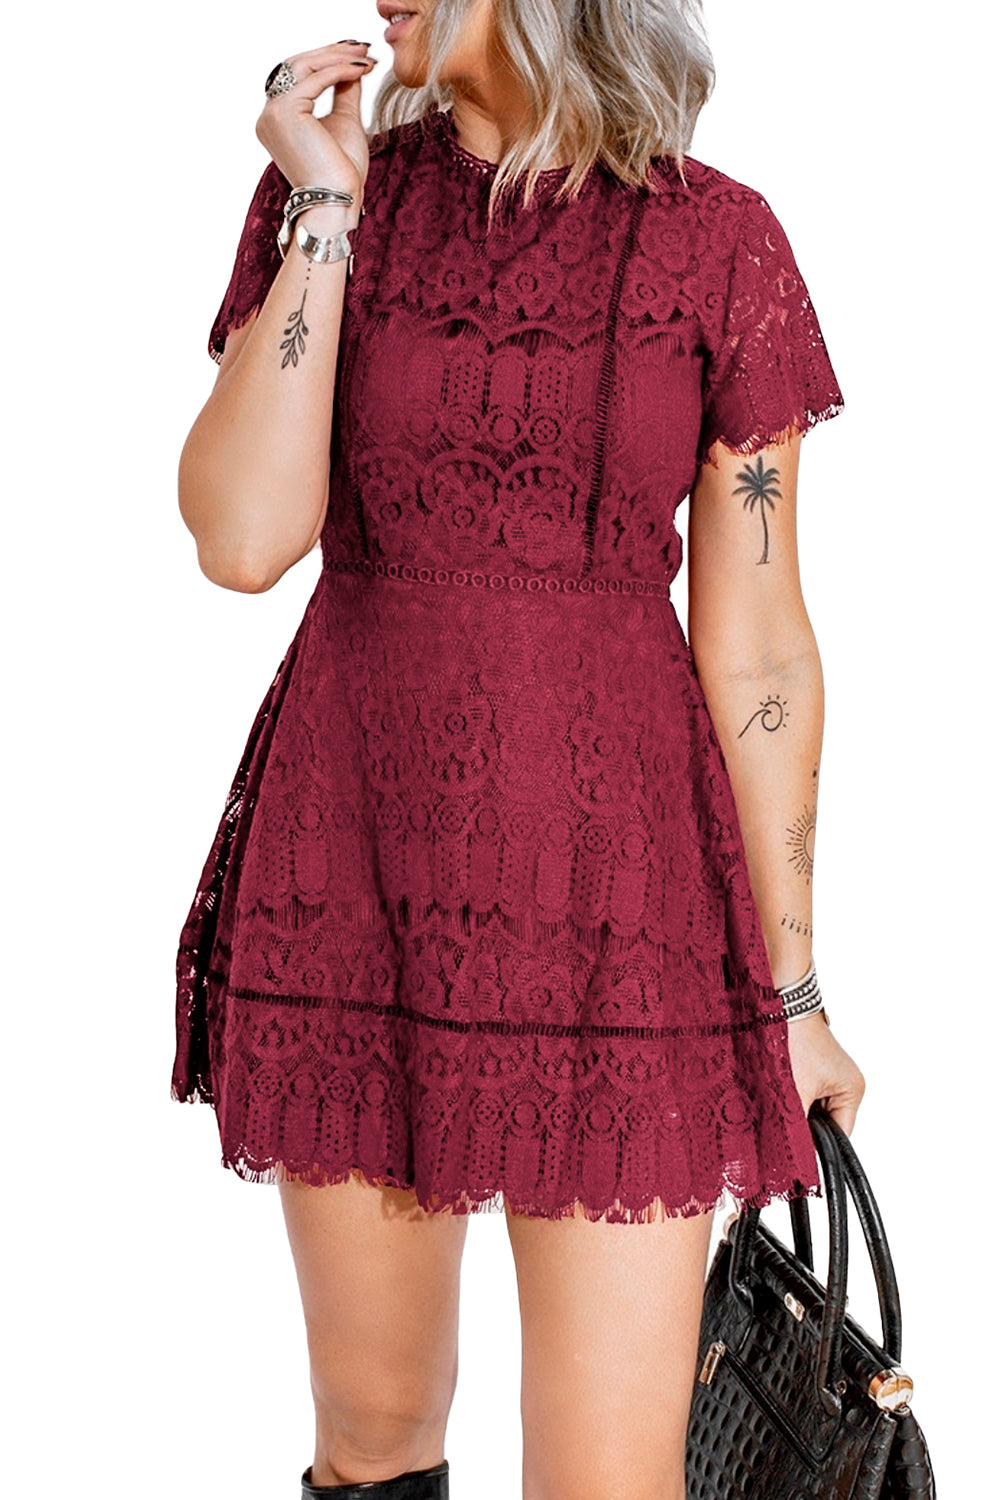 Lace Crochet Short Sleeve Casual High Waist Mini Dress